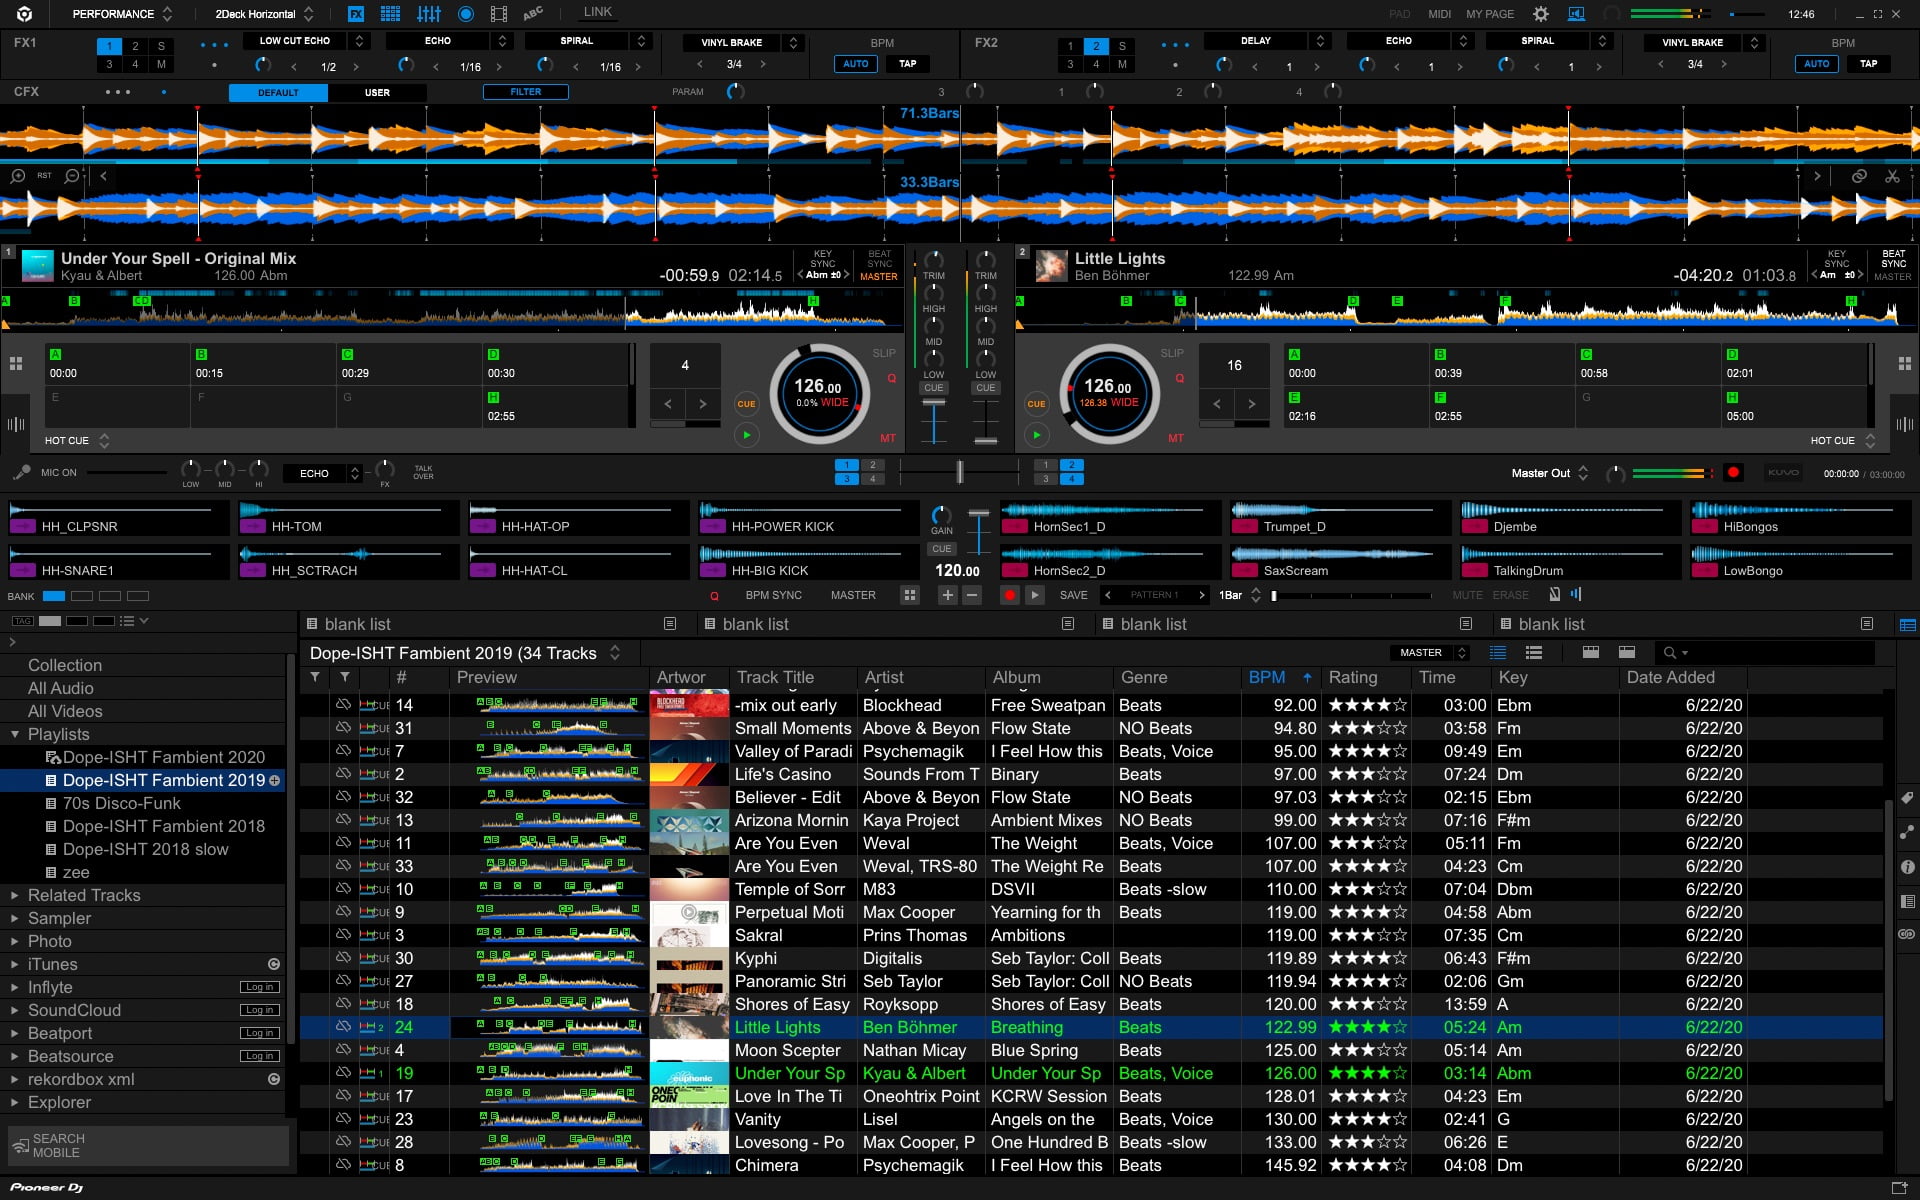 download the last version for ipod Pioneer DJ rekordbox 6.7.4